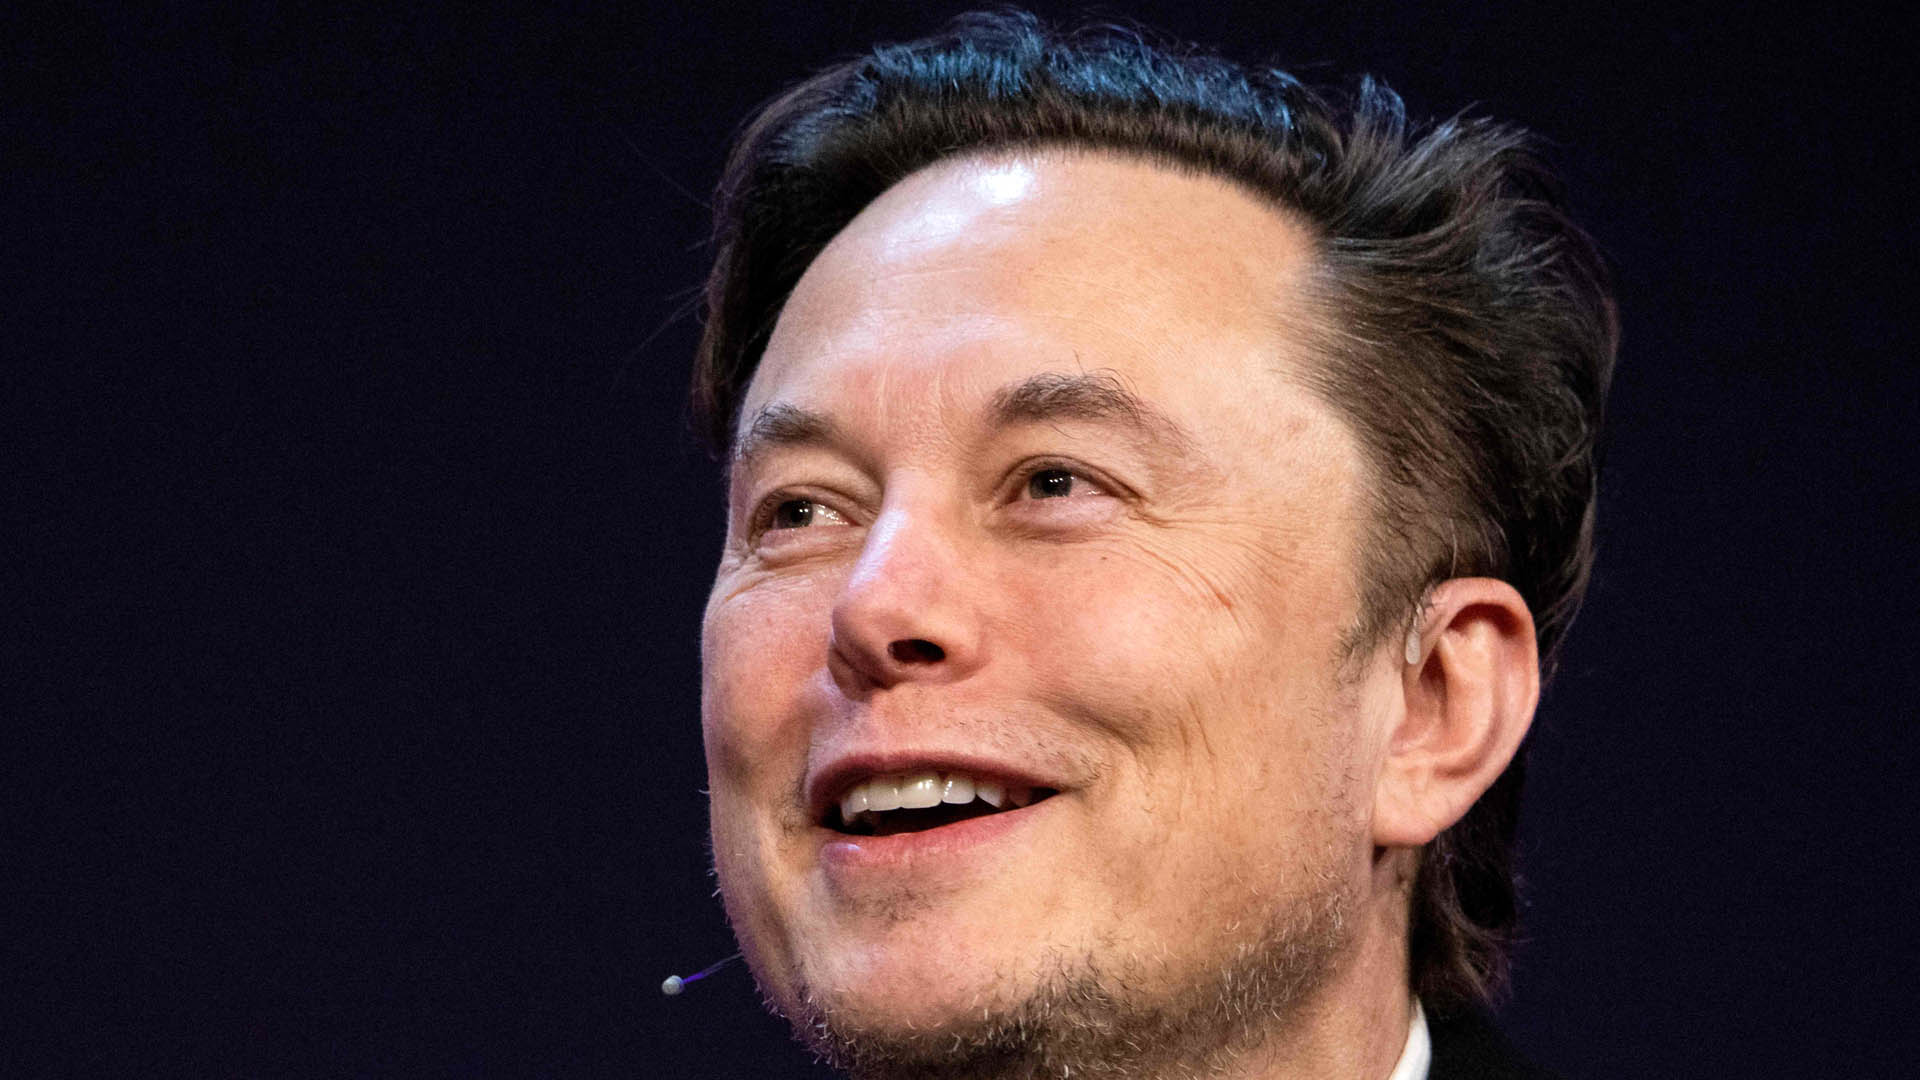 Twitter in uproar over potential Trump return as Elon Musk buys app